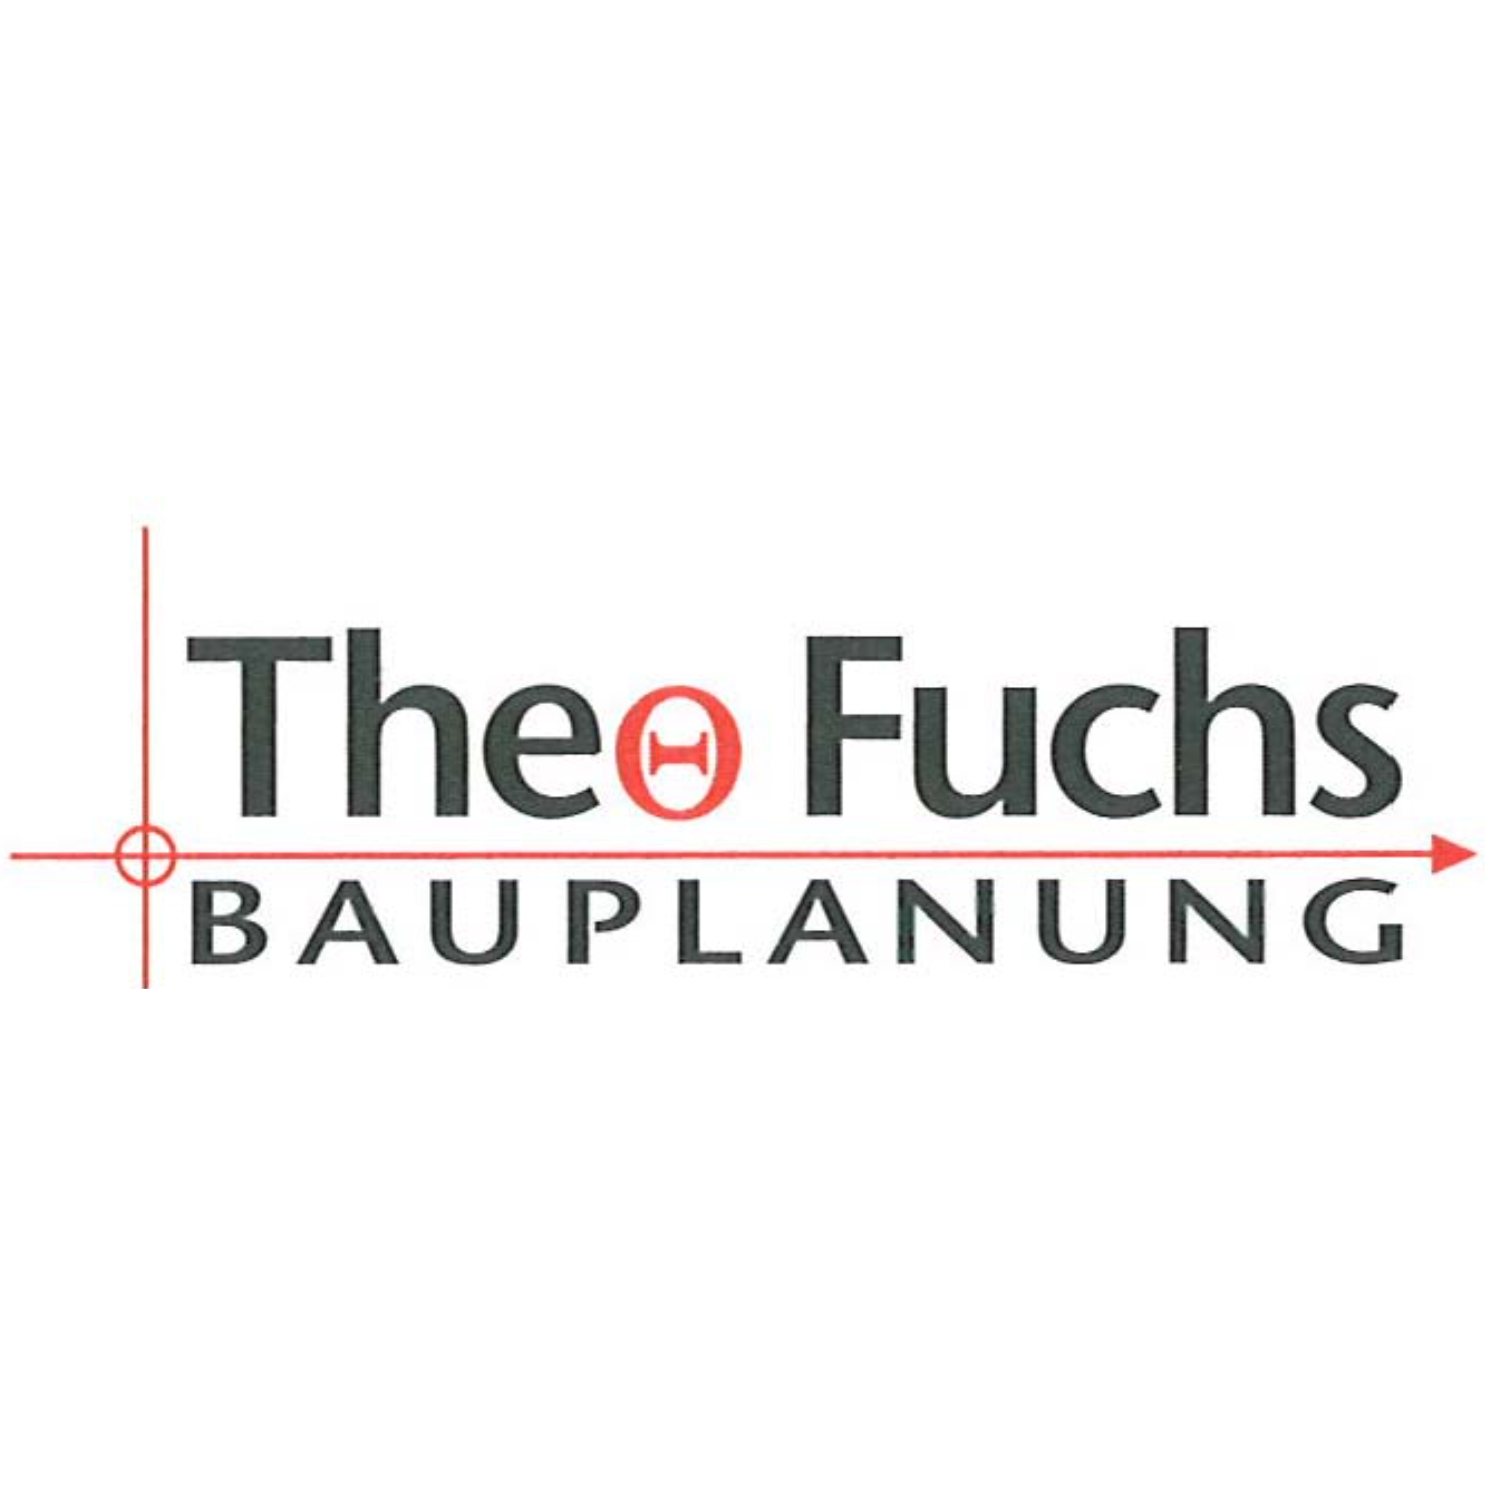 Theo Fuchs Bauplanung Logo